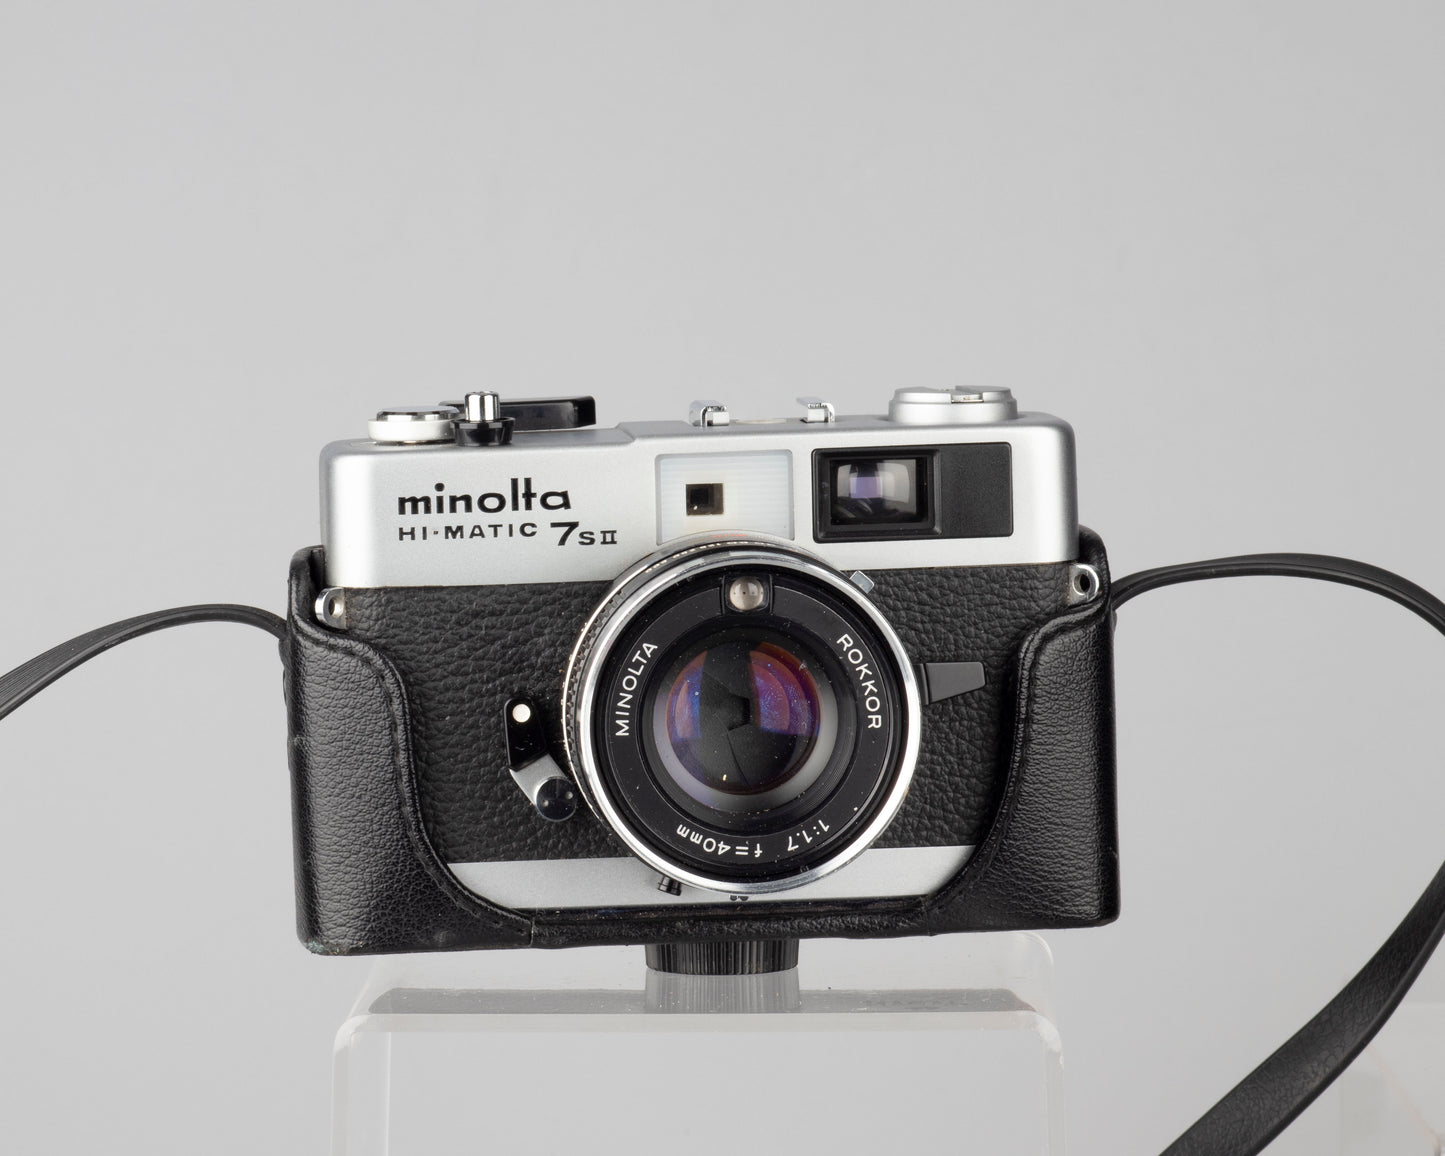 Minolta Hi-Matic 7SII 35mm rangefinder camera with half-case and Minolta 20 flash